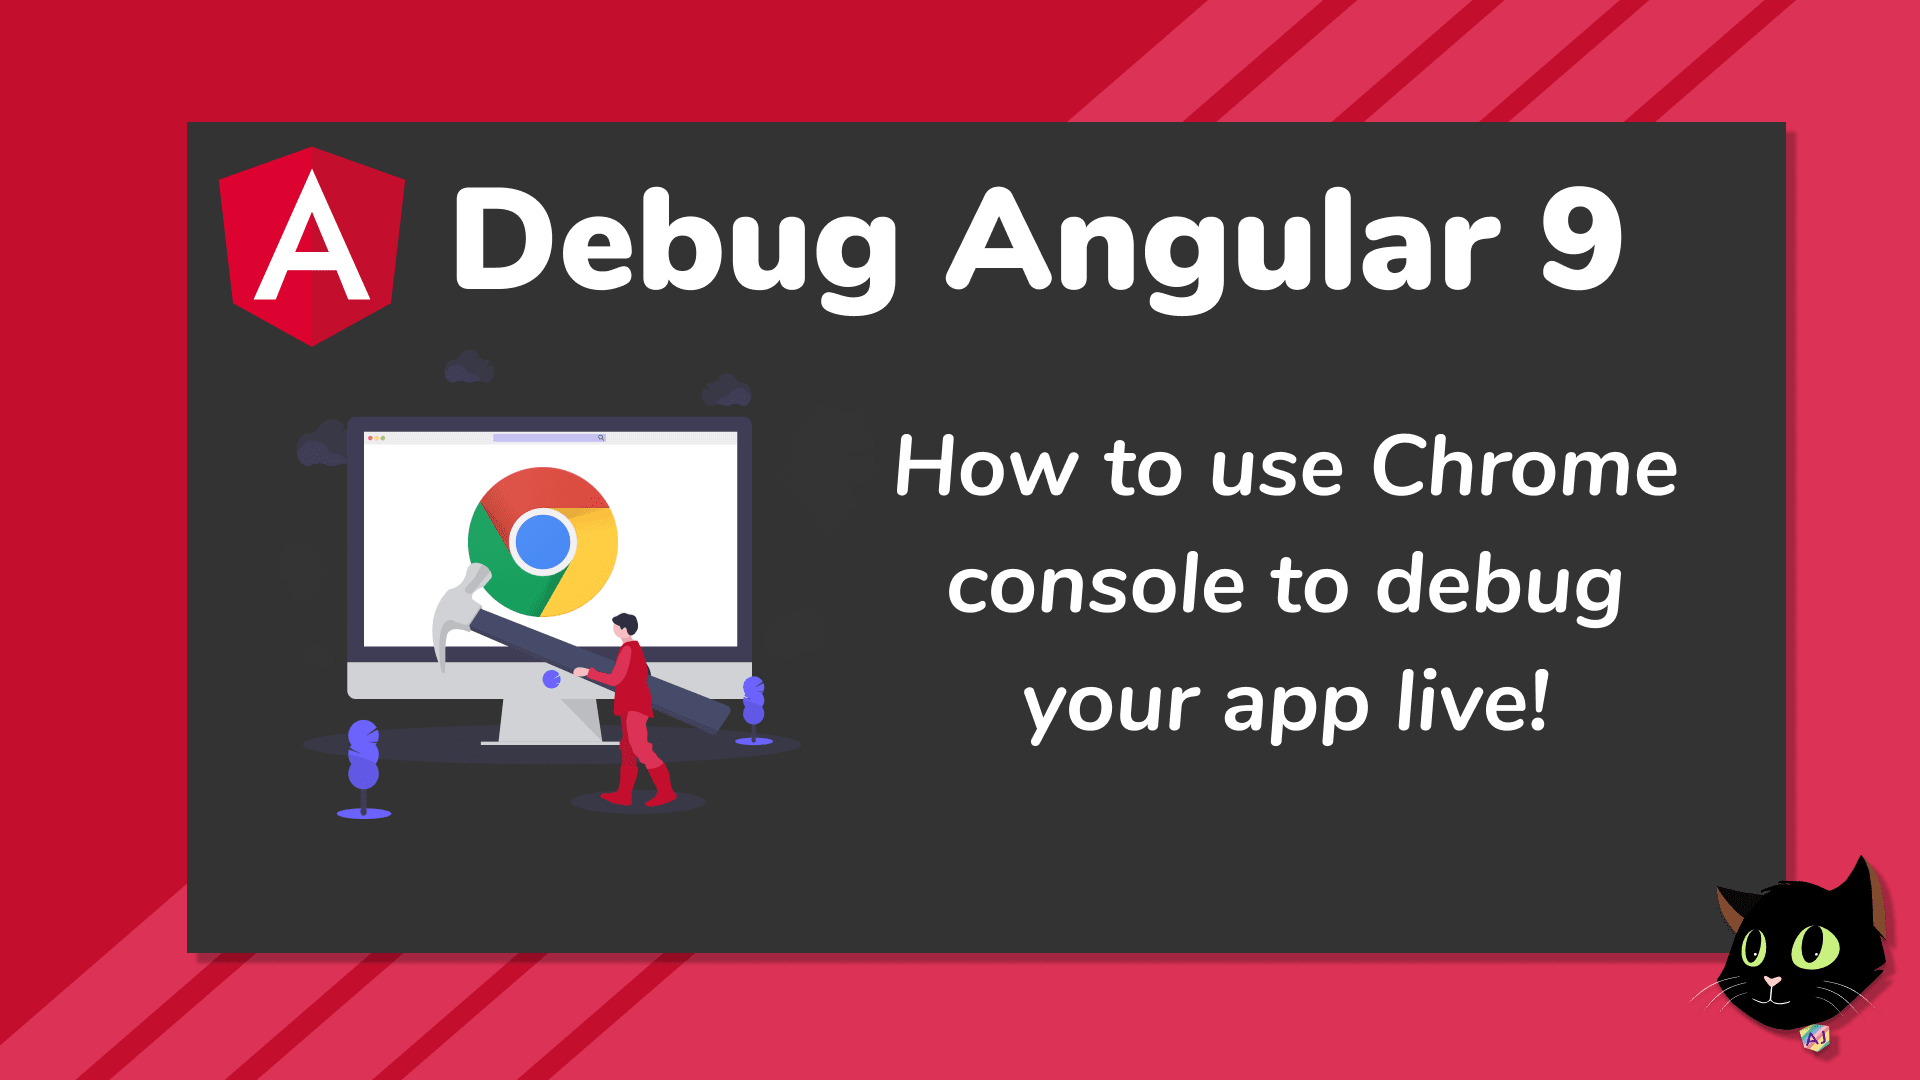 Debug Angular 9 in Chrome Console